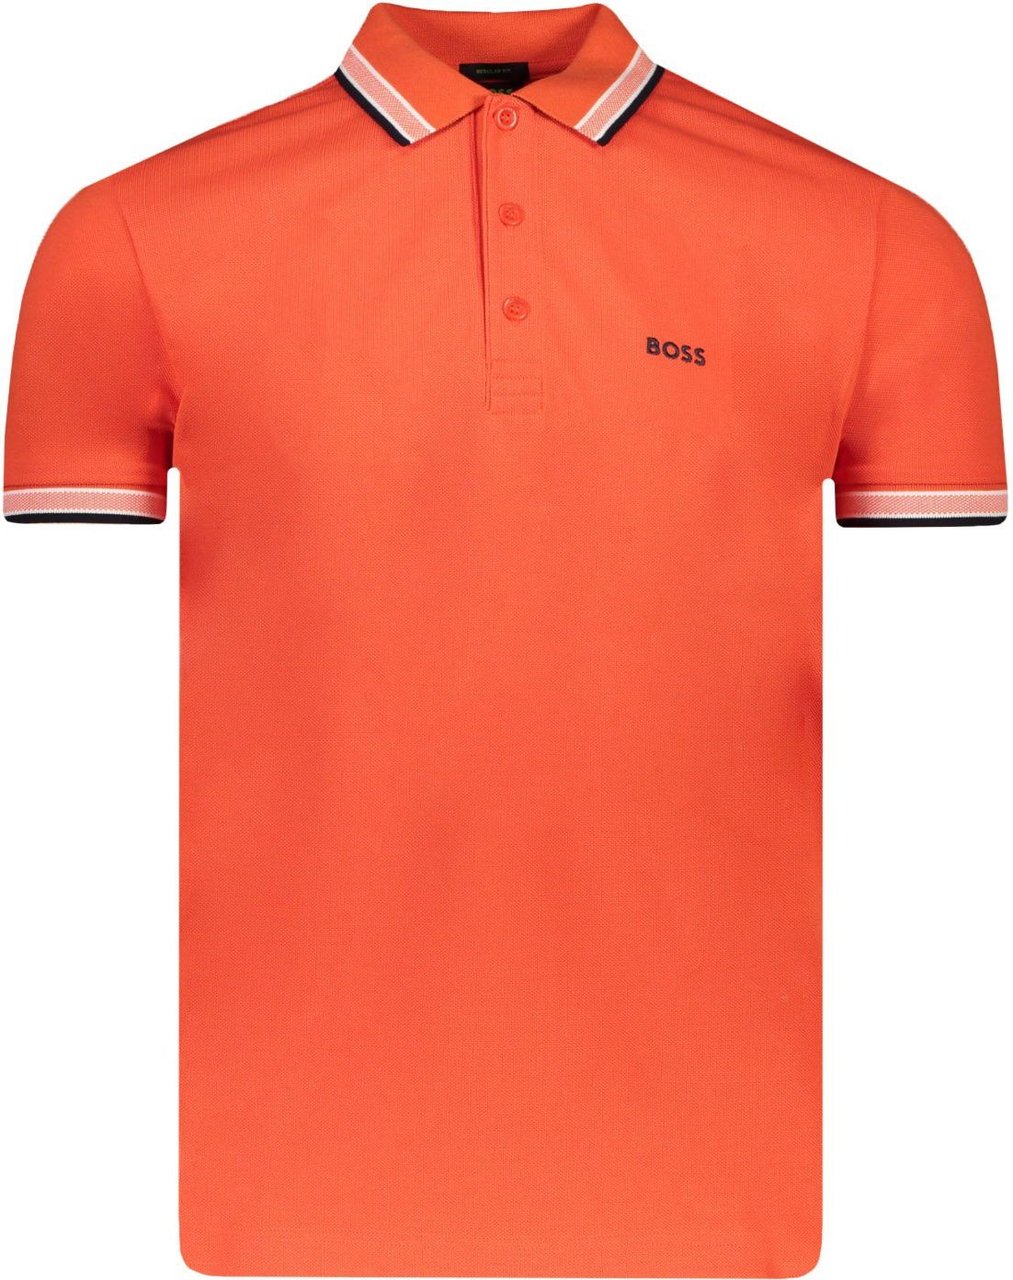 Hugo Boss Polo Oranje Oranje